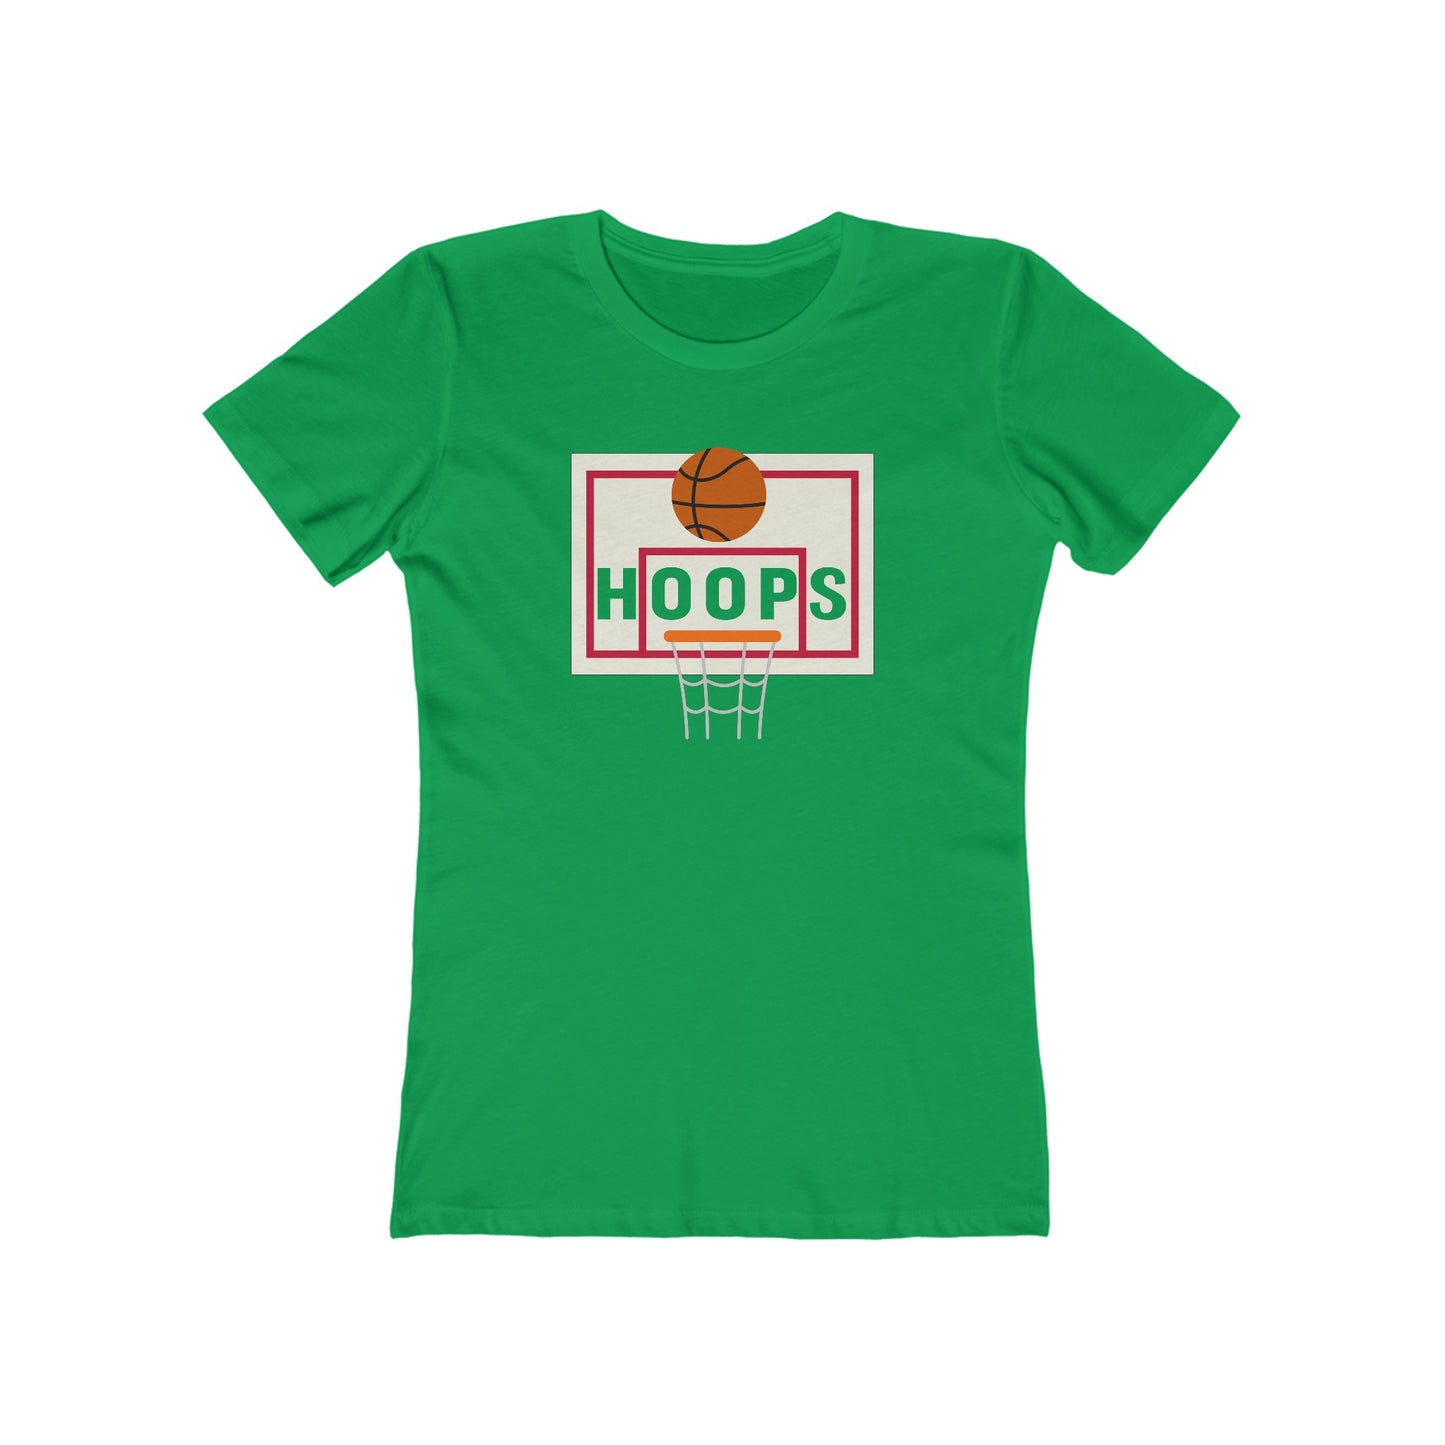 Hoops - Women's T-Shirt